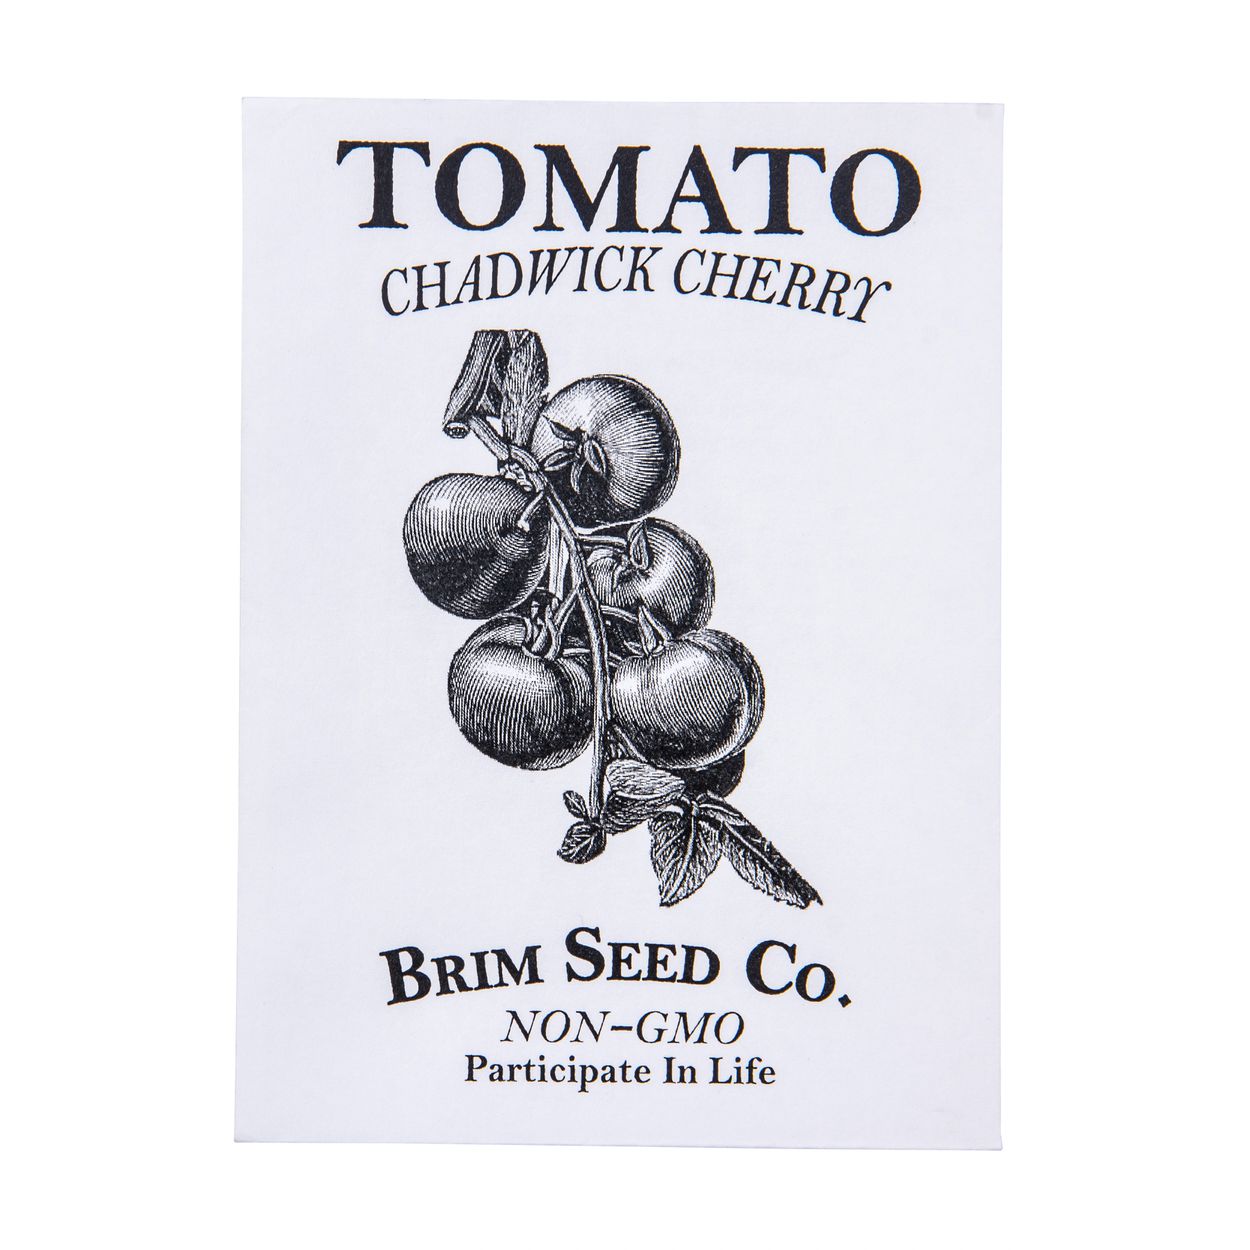 Brim Seed Co. - Chadwick Cherry Tomato Seed